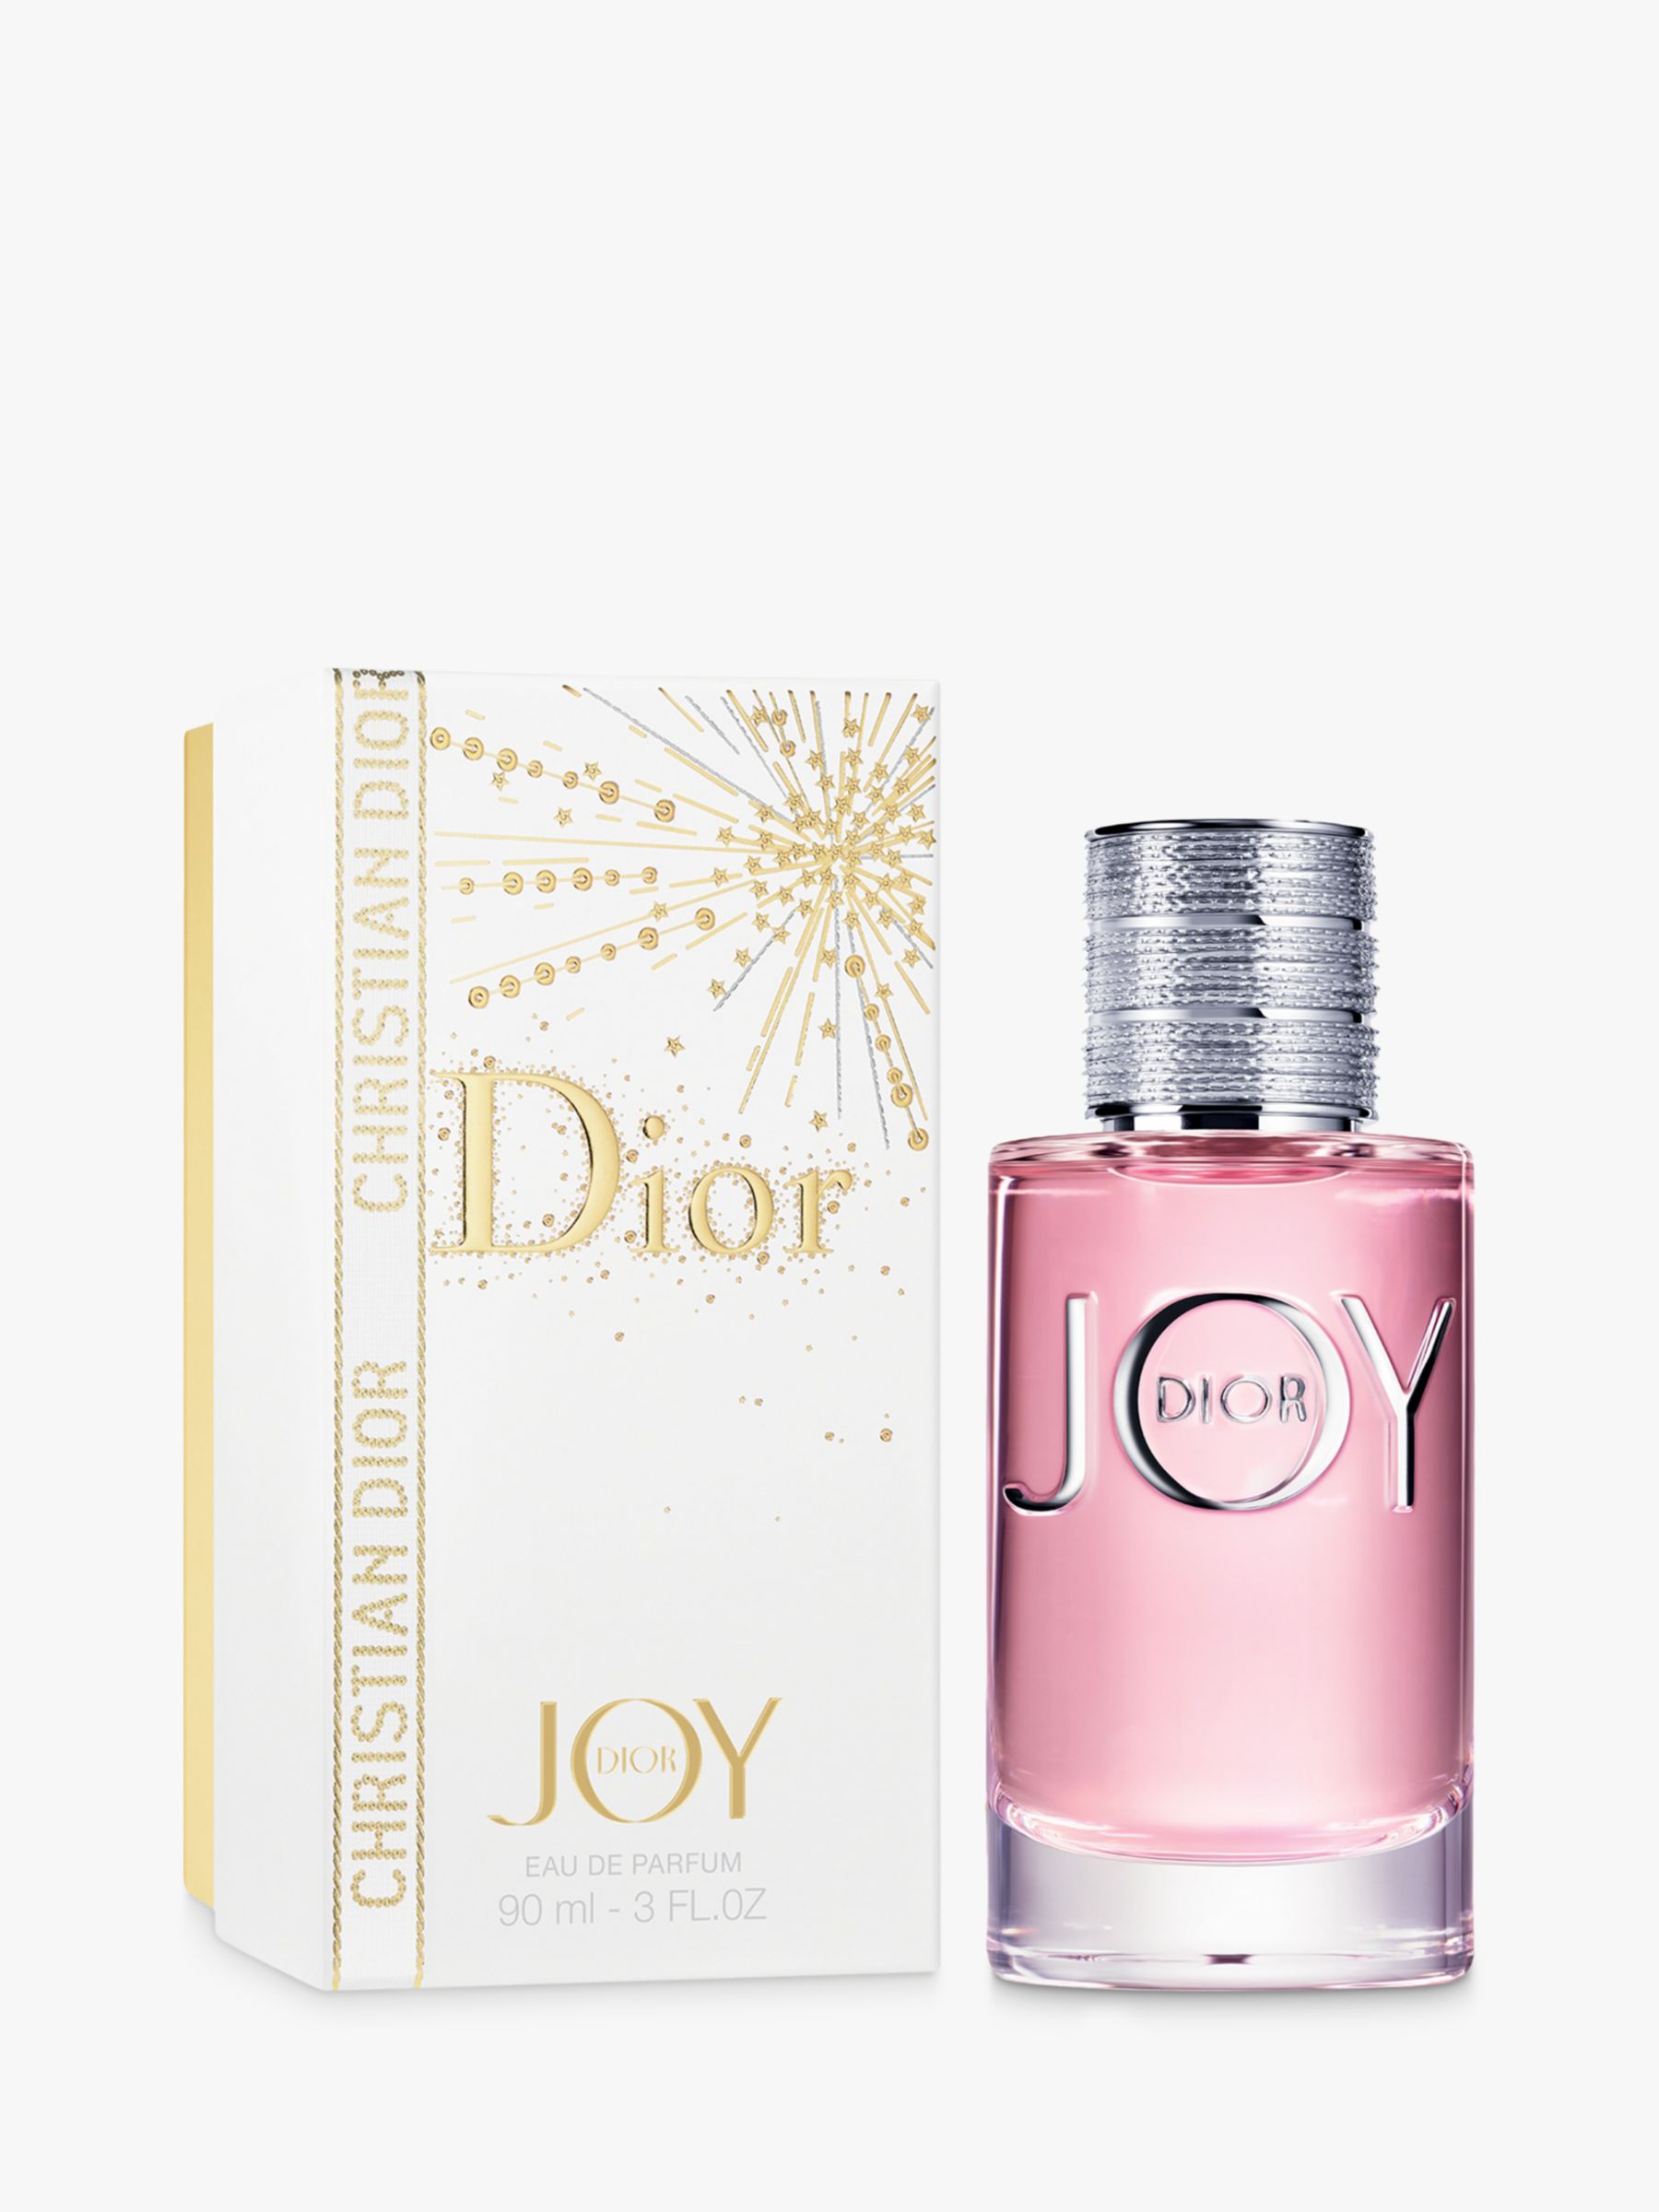 dior joy perfume debenhams